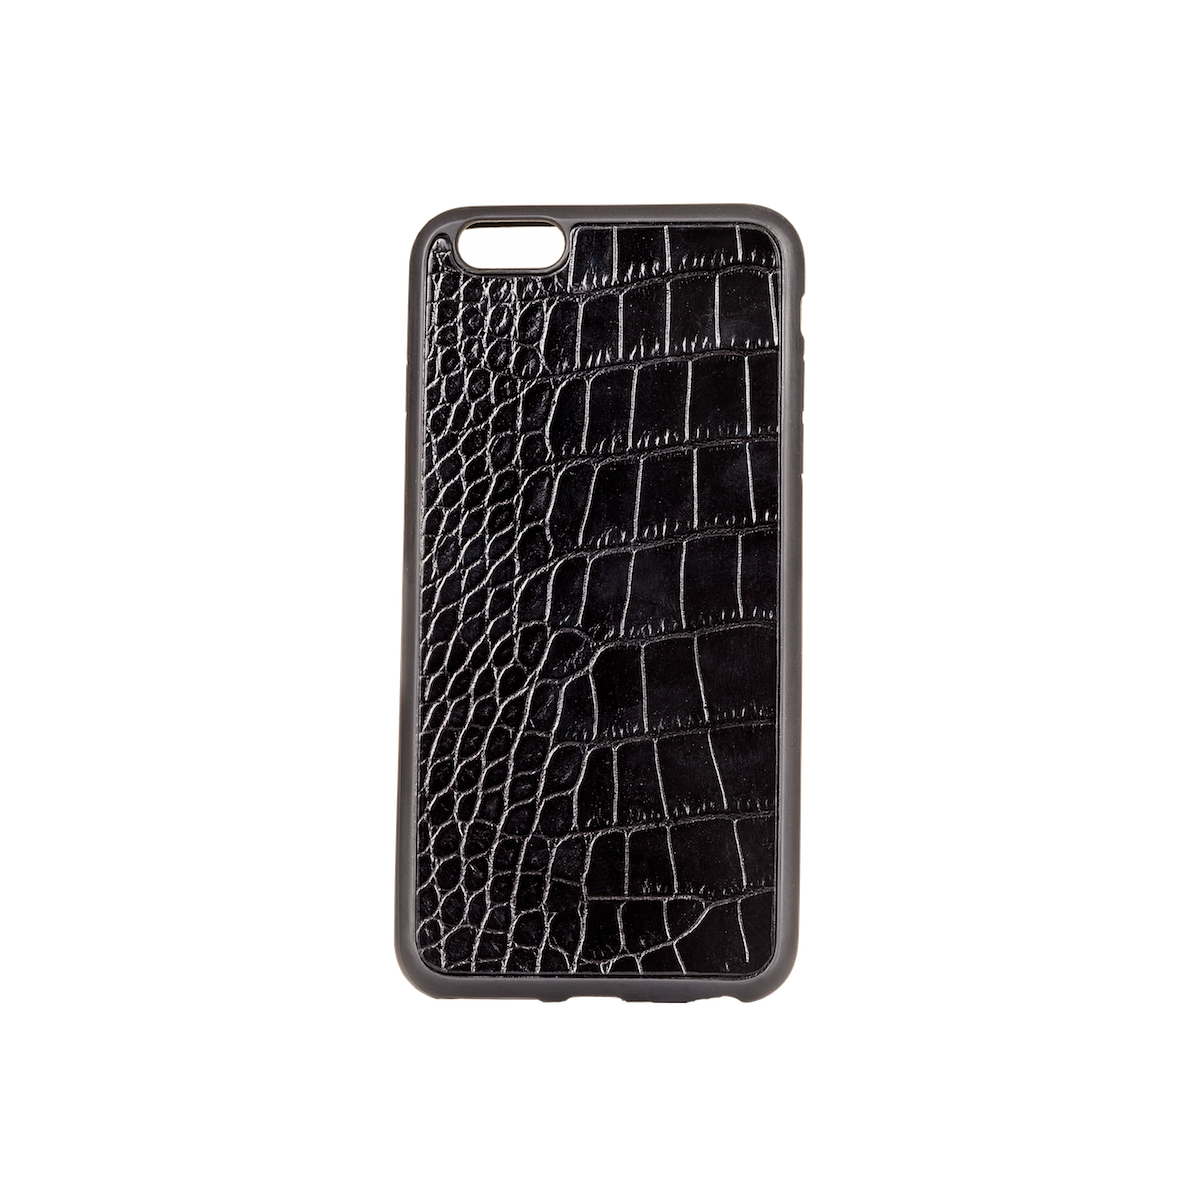 Iphone 6 Plus Case, Black Croco Leather, MAISON JMK-VONMEL Luxe Gifts